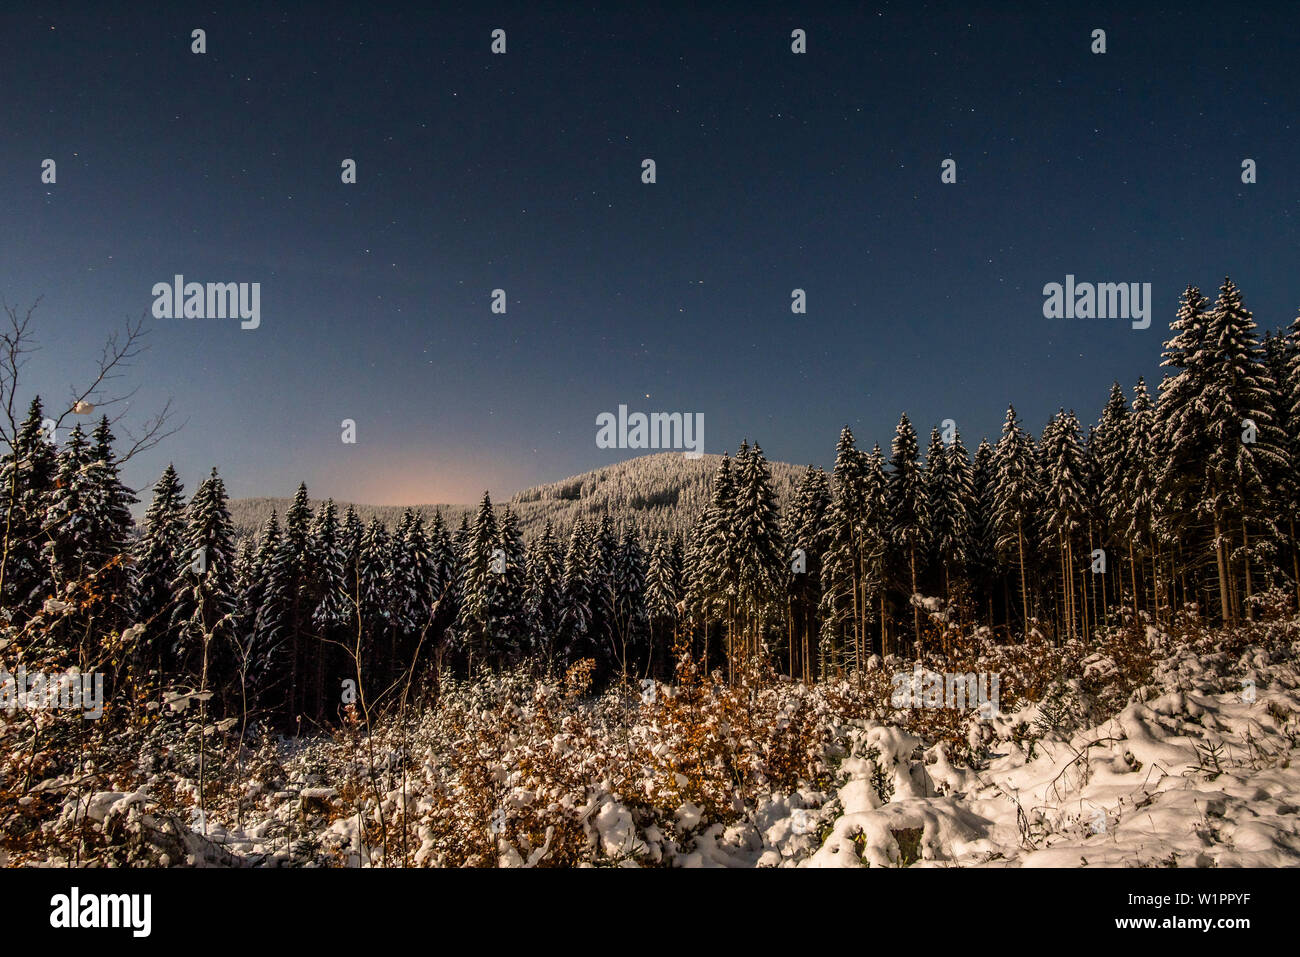 Winter Forest with low lying Winter sun, Evening Mood, Brocken, Harz national park, winter landscape, Saxony, Germany Stock Photo